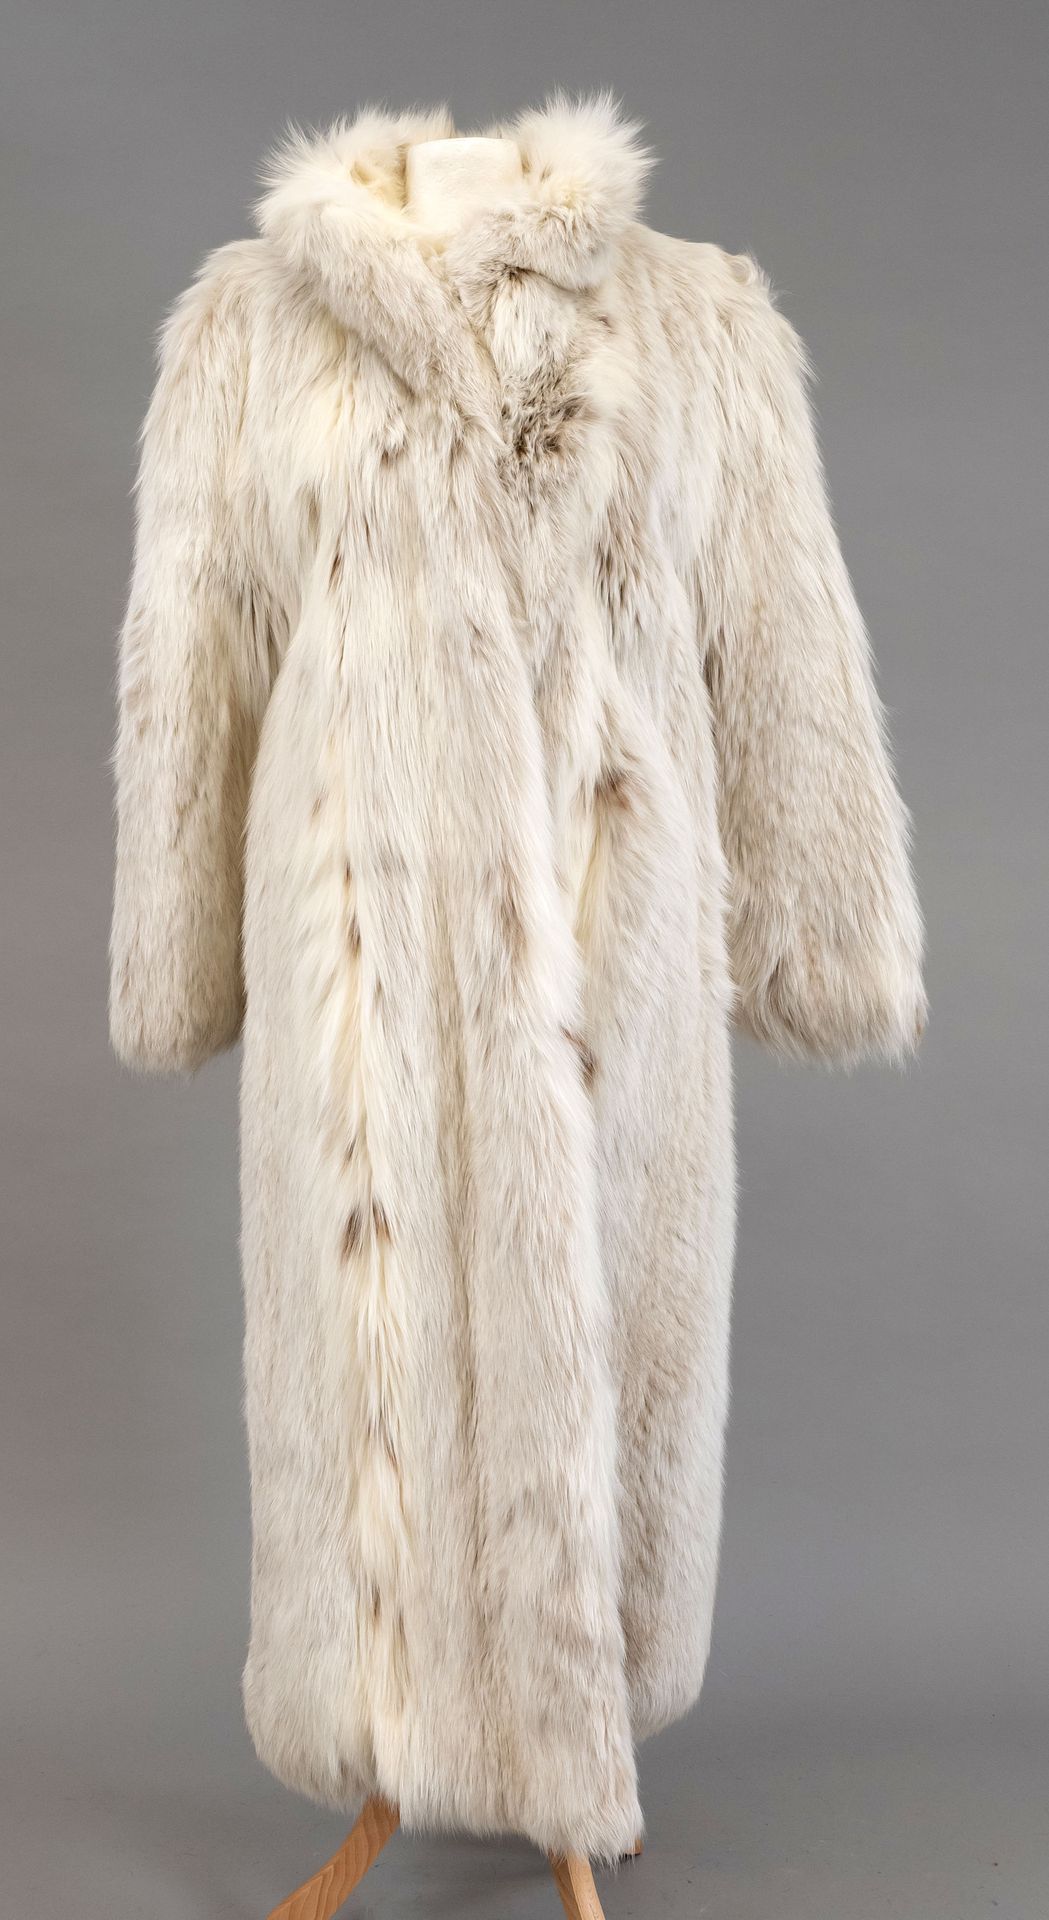 Null 女士白色狐狸毛皮大衣，在衬里的标签上标明，Saga Mink。没有标明尺寸，有轻微磨损痕迹。